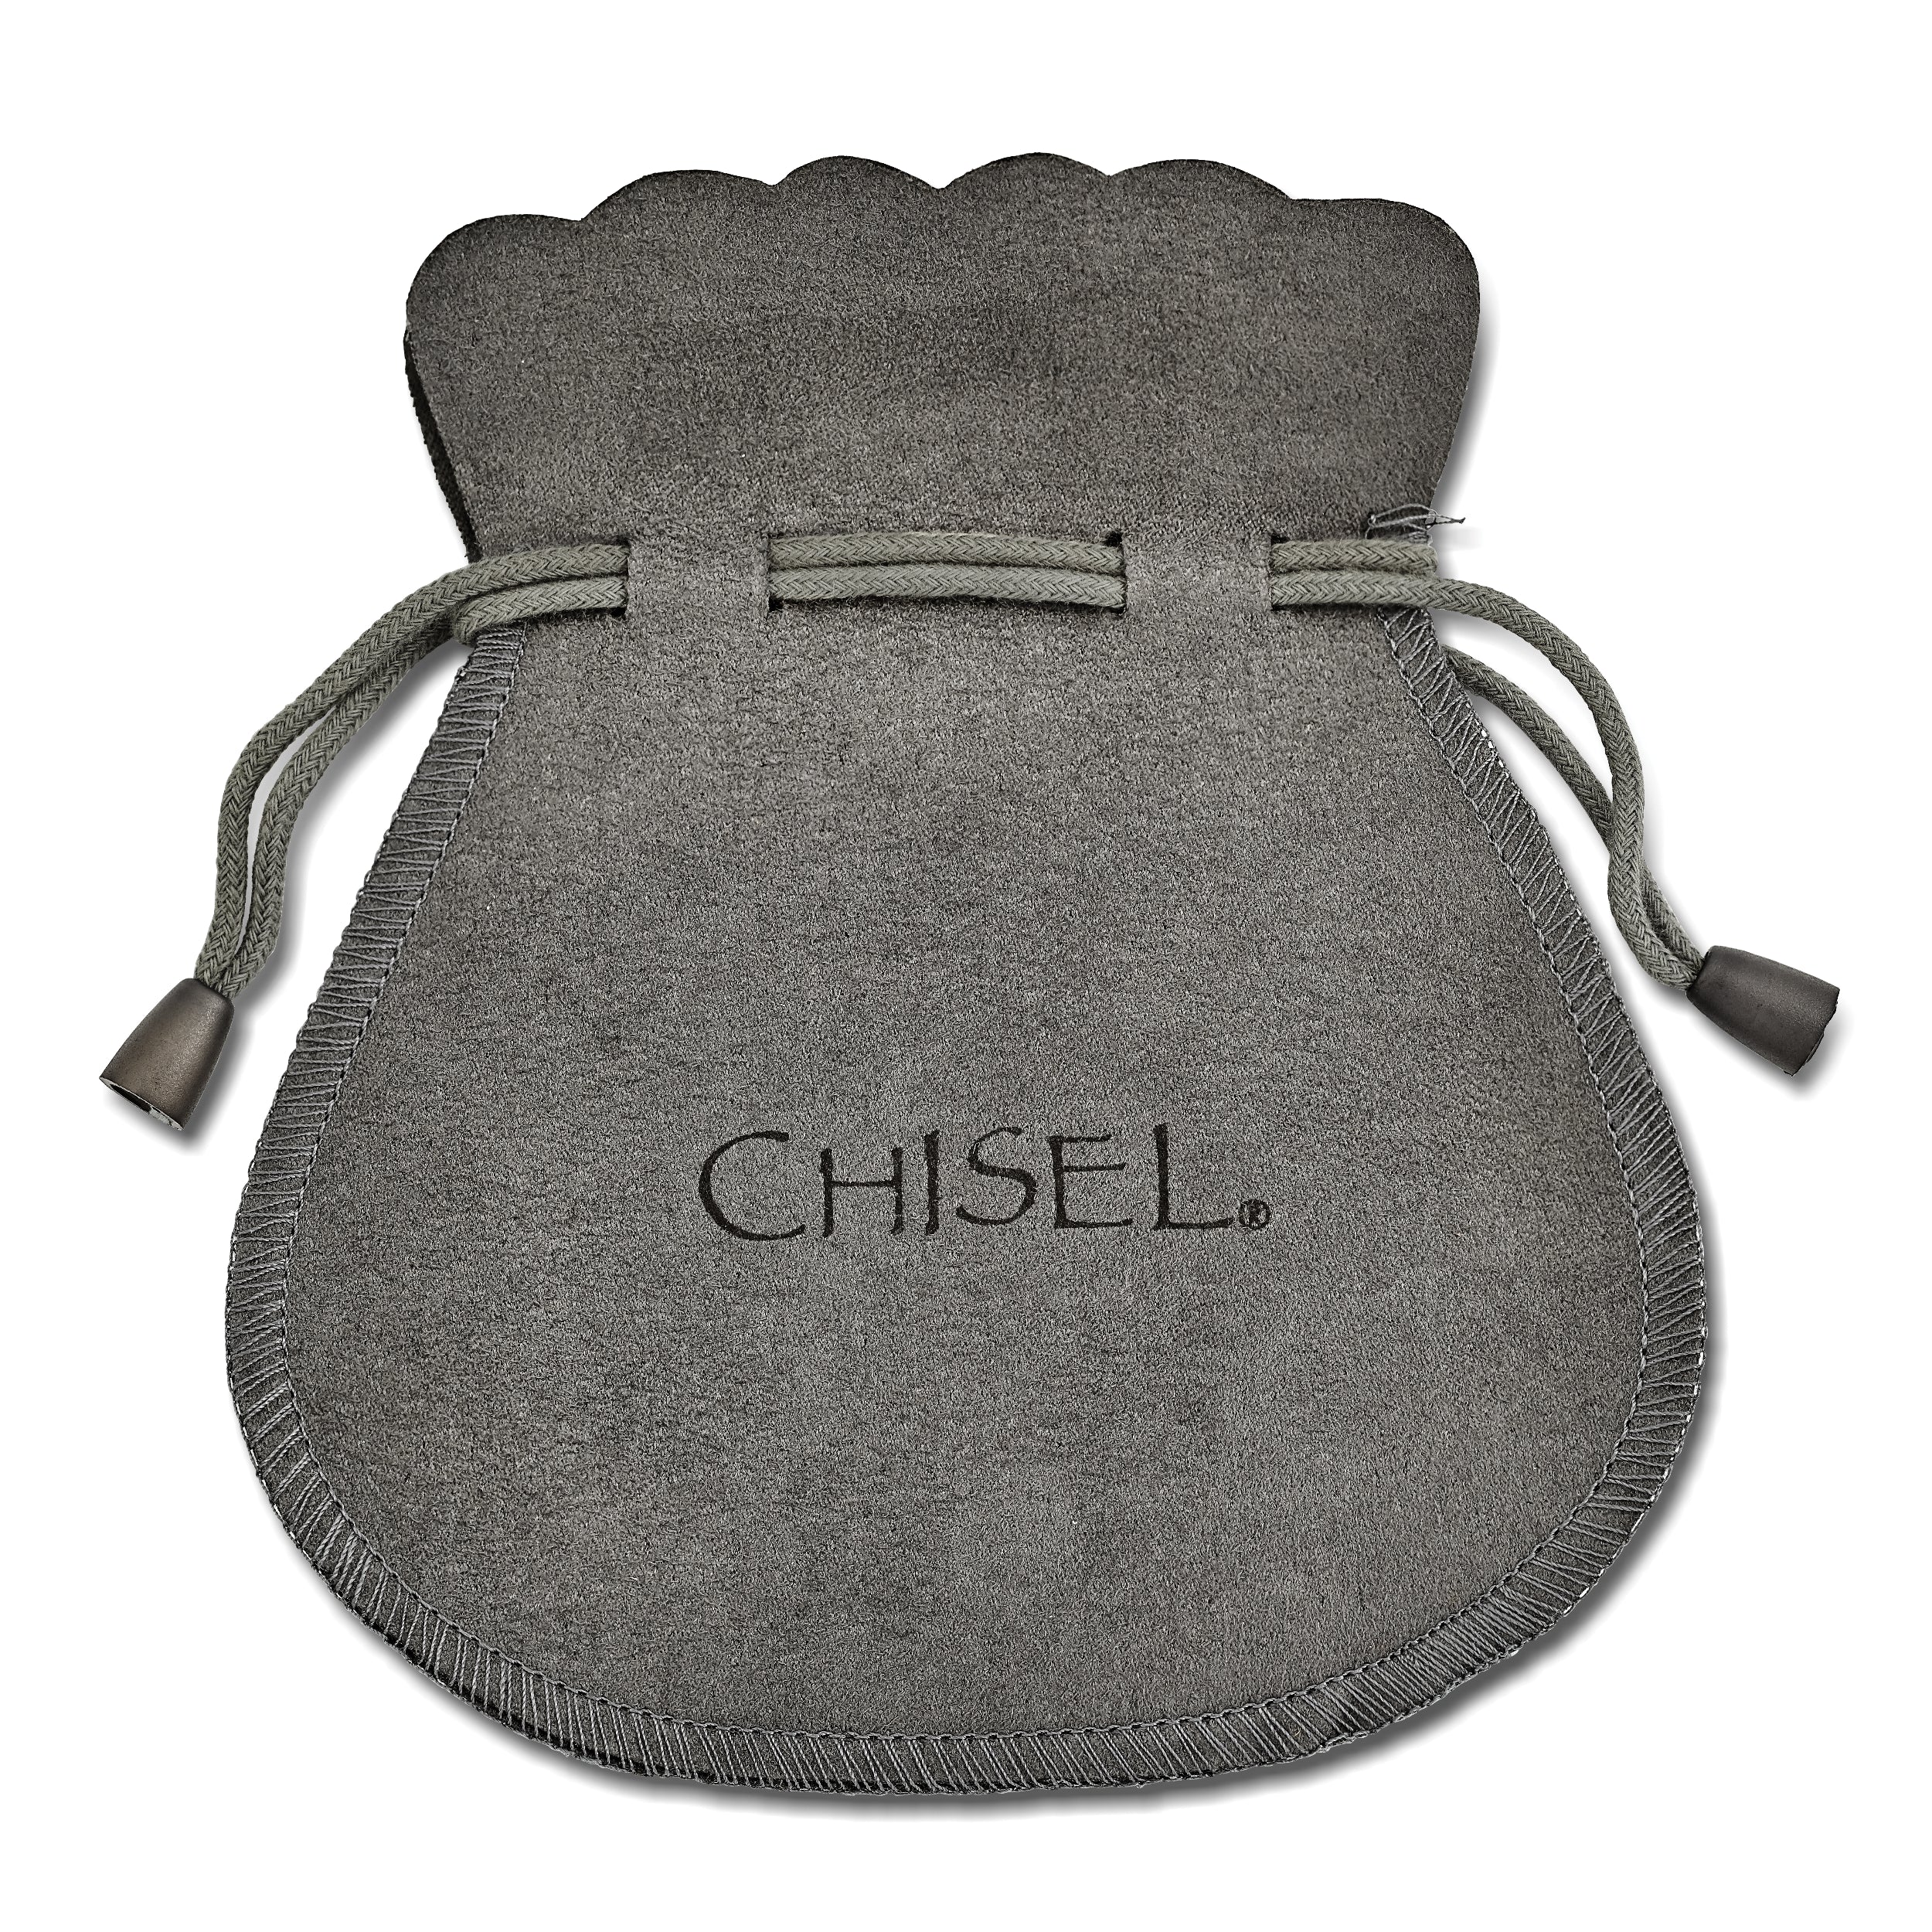 Chisel Titanium Polished 7.5mm 20 inch Curb Chain